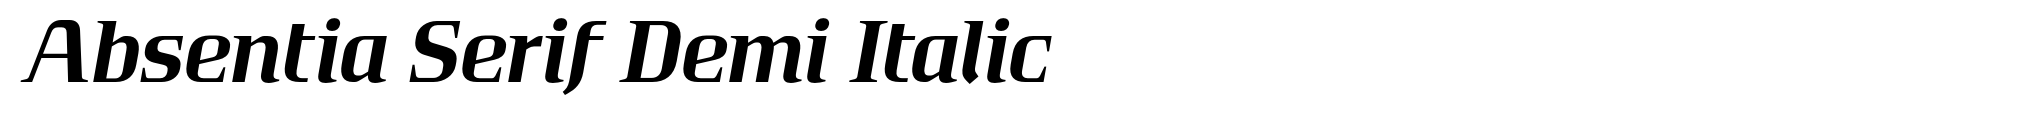 Absentia Serif Demi Italic image